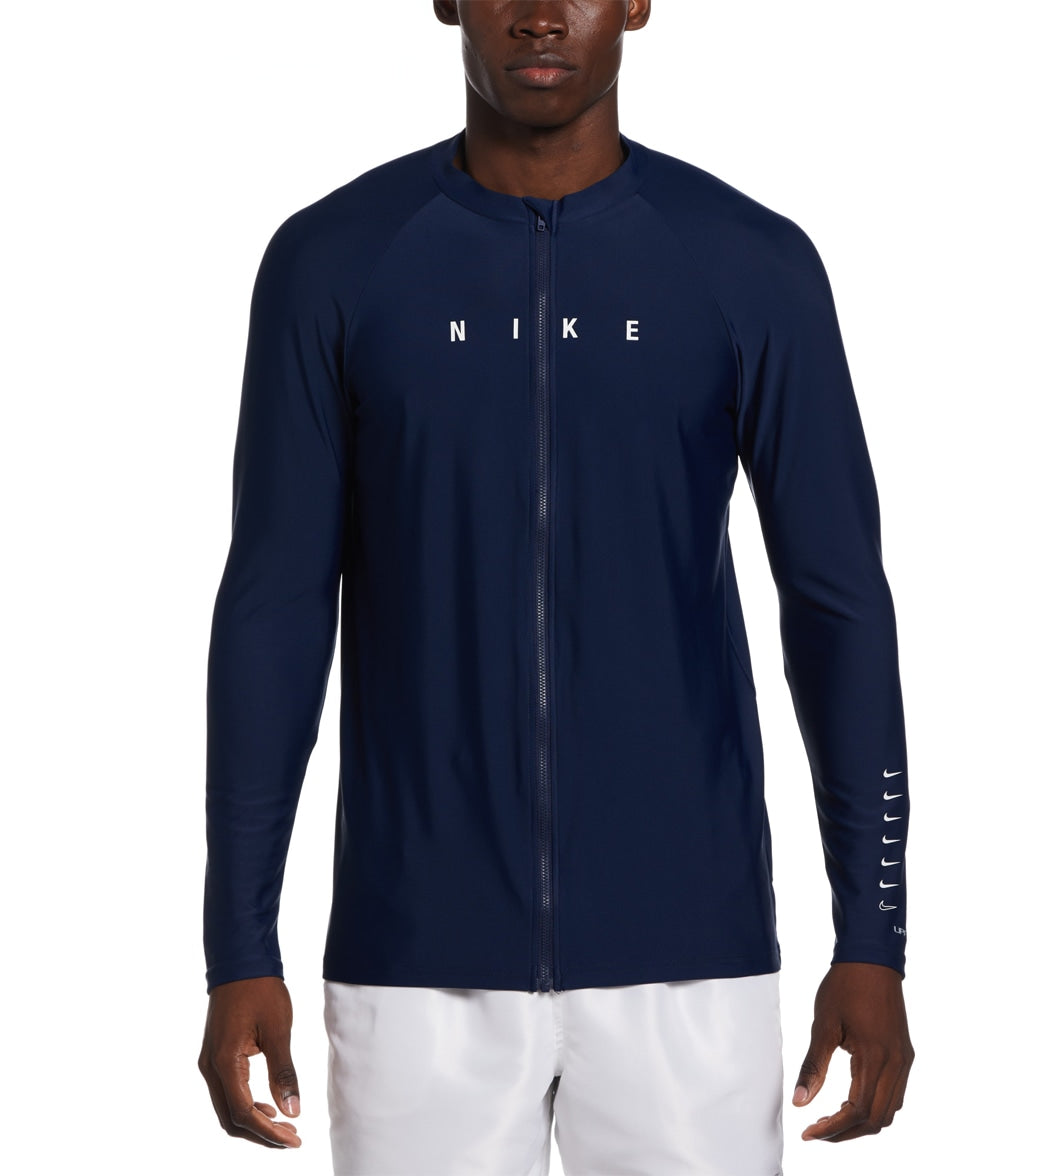 Nike Men's Hydro UV Dri Fit Long Sleeve Zip Top at SwimOutlet.com